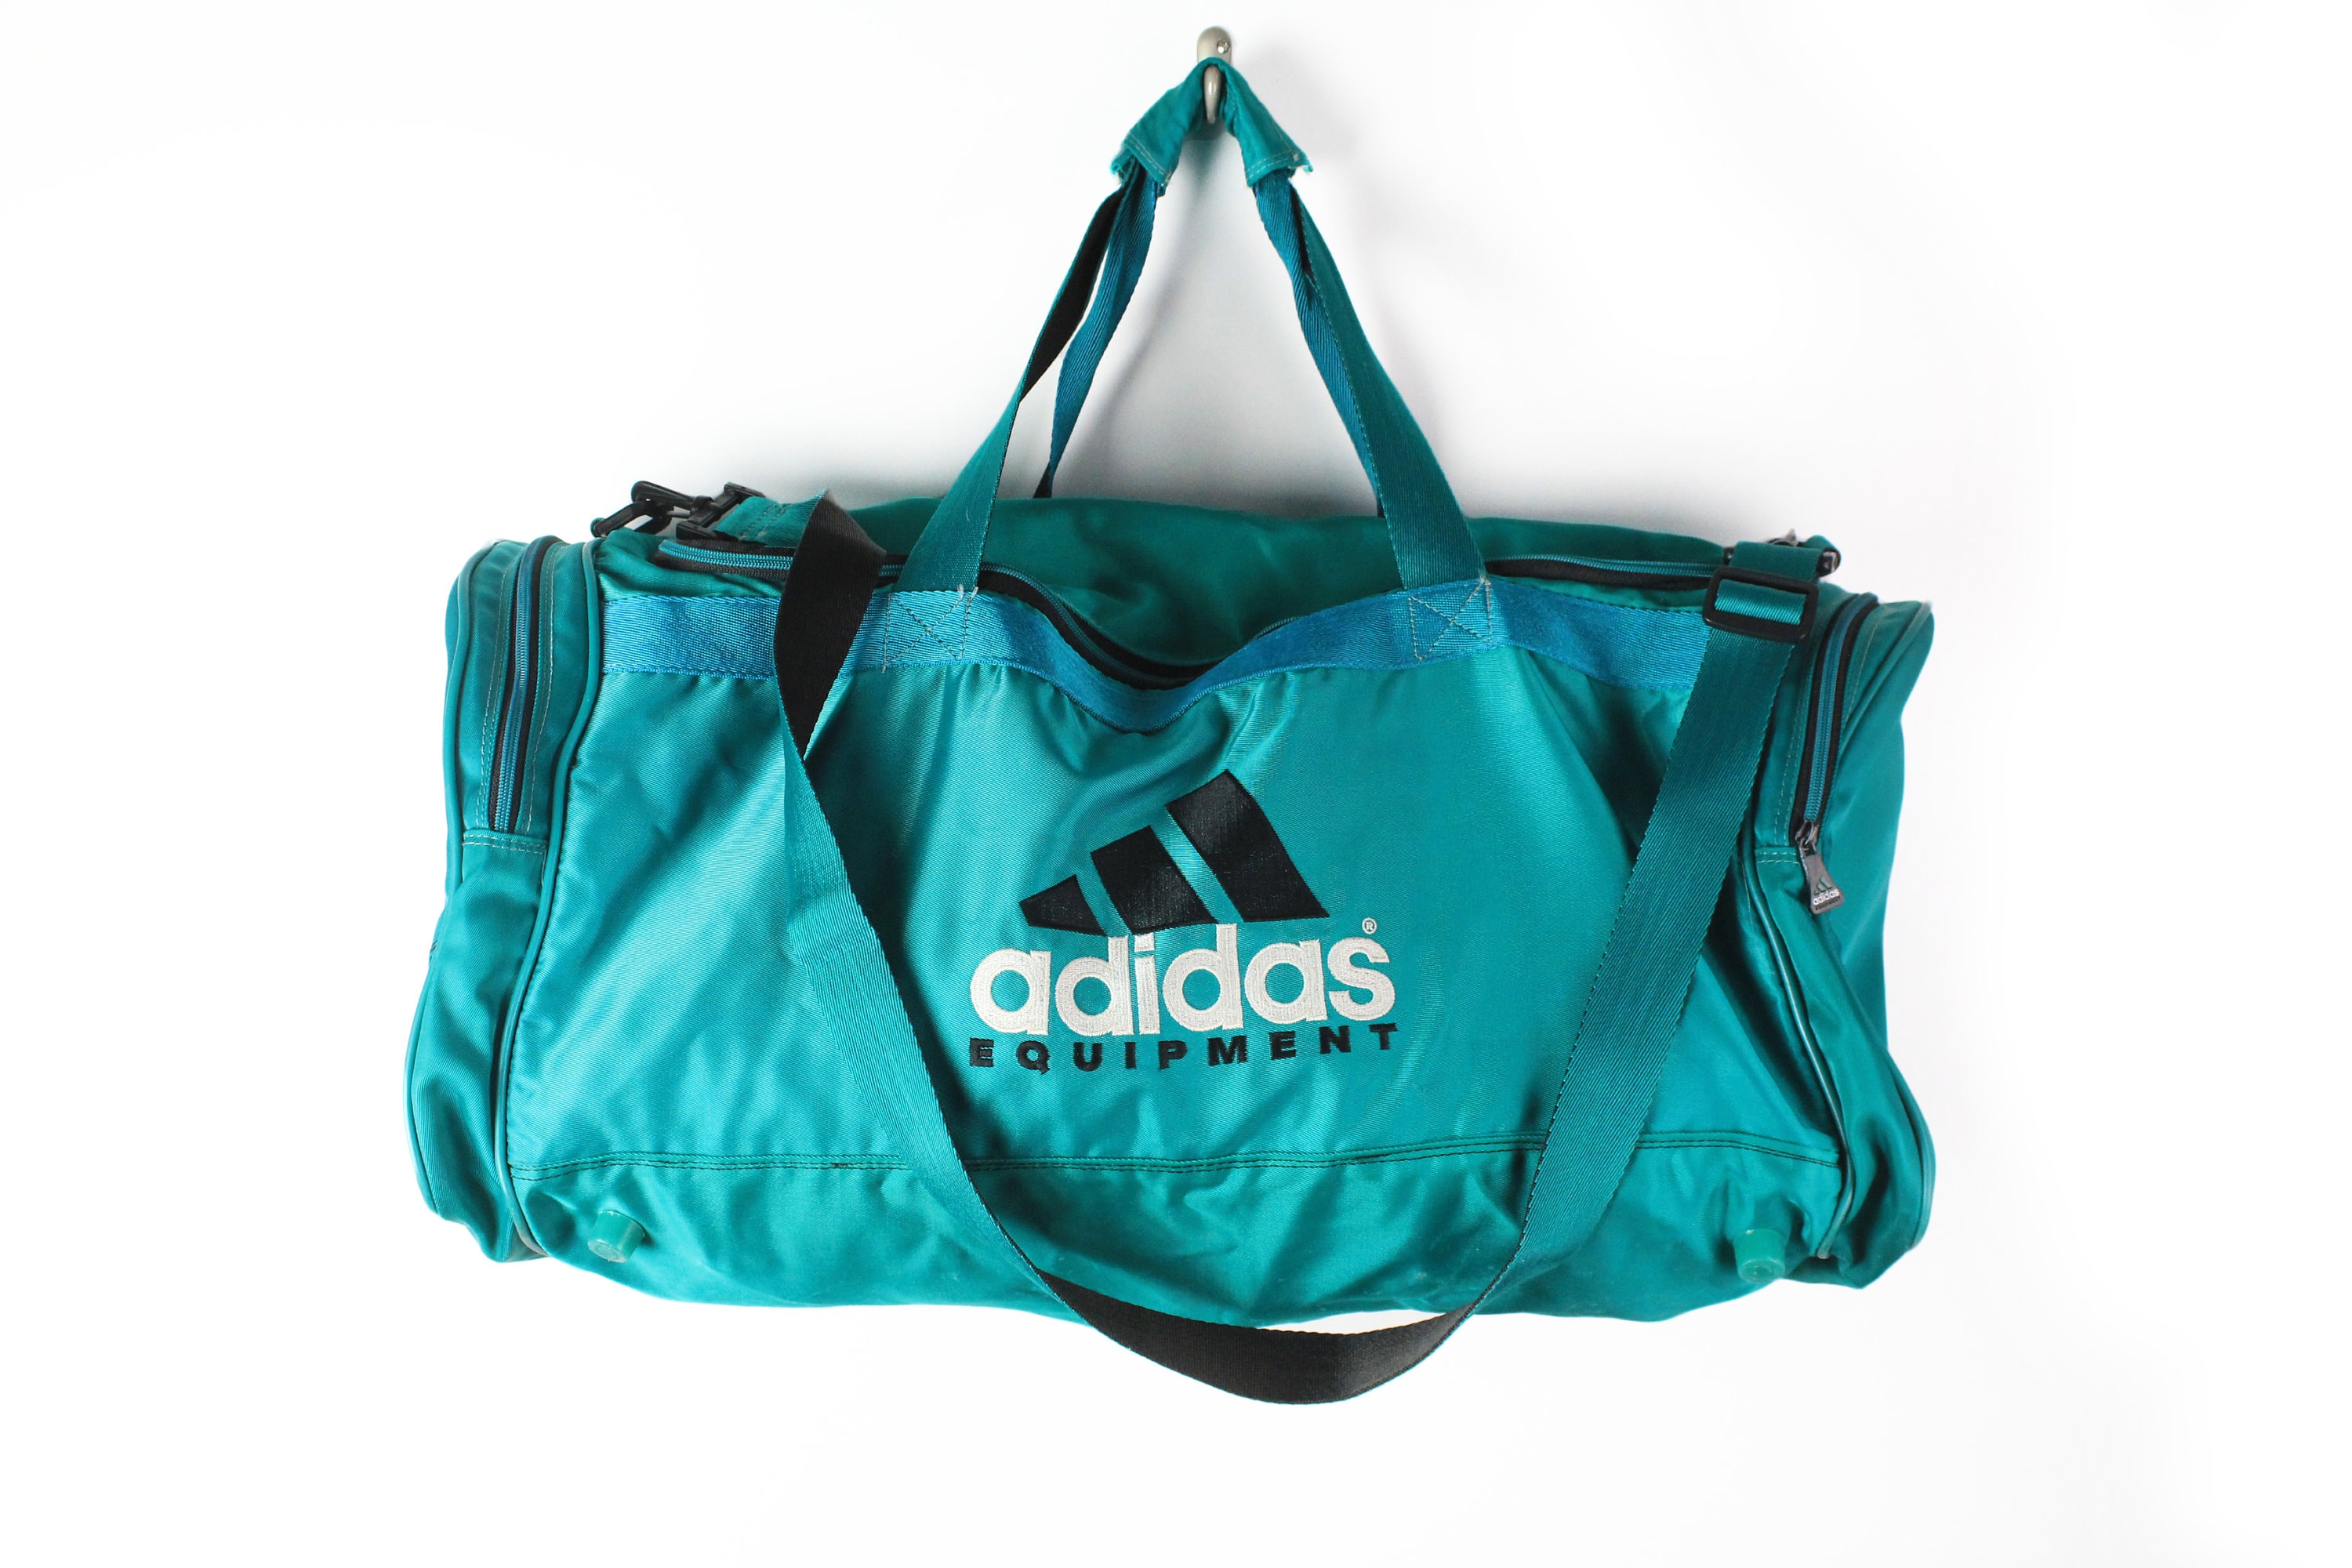 Vintage ADIDAS Equipment Duffel Bag Travel Green Sport Rare Authentic  Accessories Retro Bag Streetwear Athletic Training Bag 90's Style - Etsy